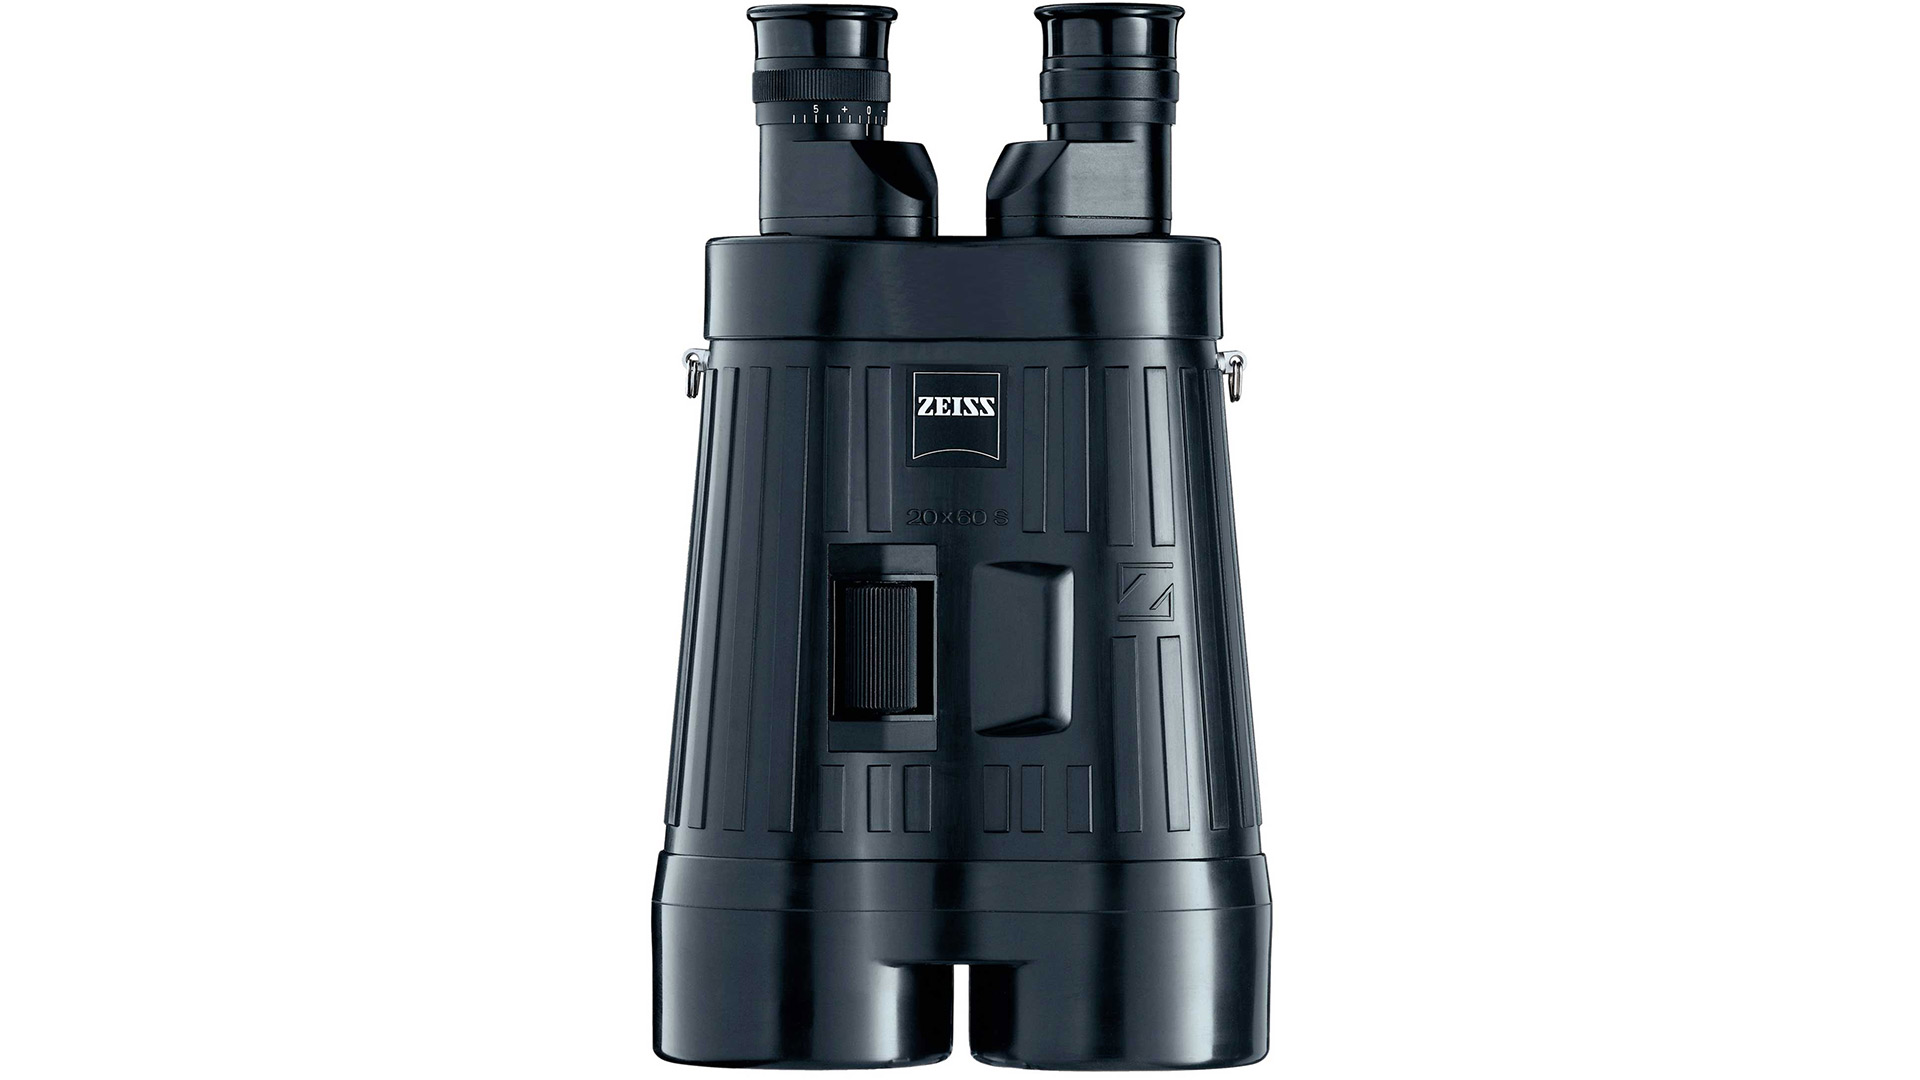 20x60 S binoculars with mechanical image stabilization